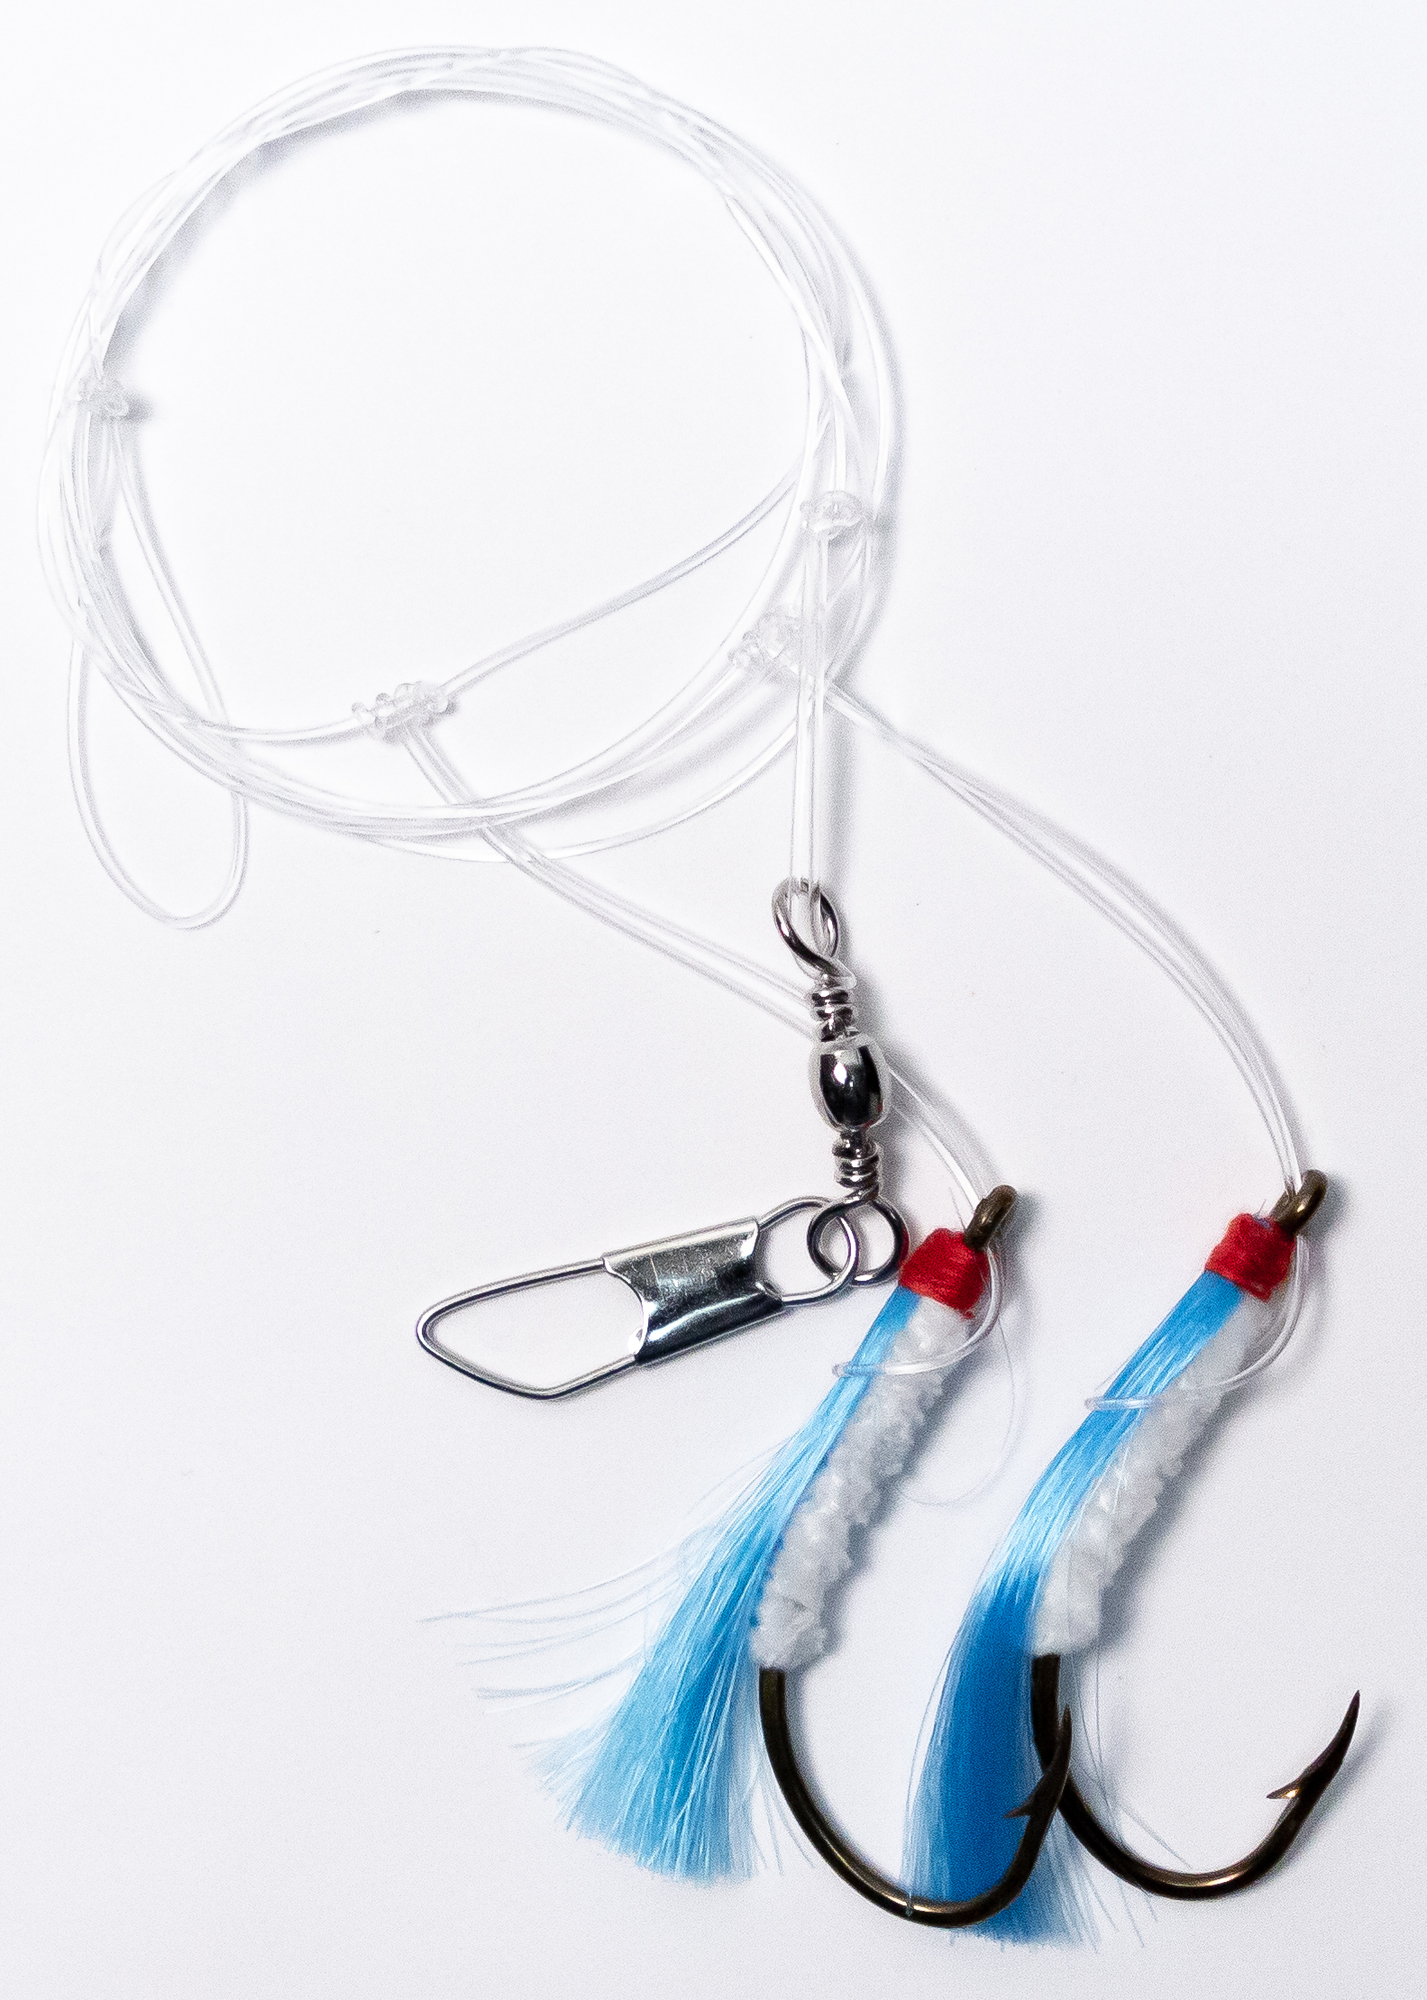 Sea Striker Double-drop Shrimp Fly Fishing Rig, Blue/White Flies, 60# Leader Line, #7/0 Hooks - image 1 of 2